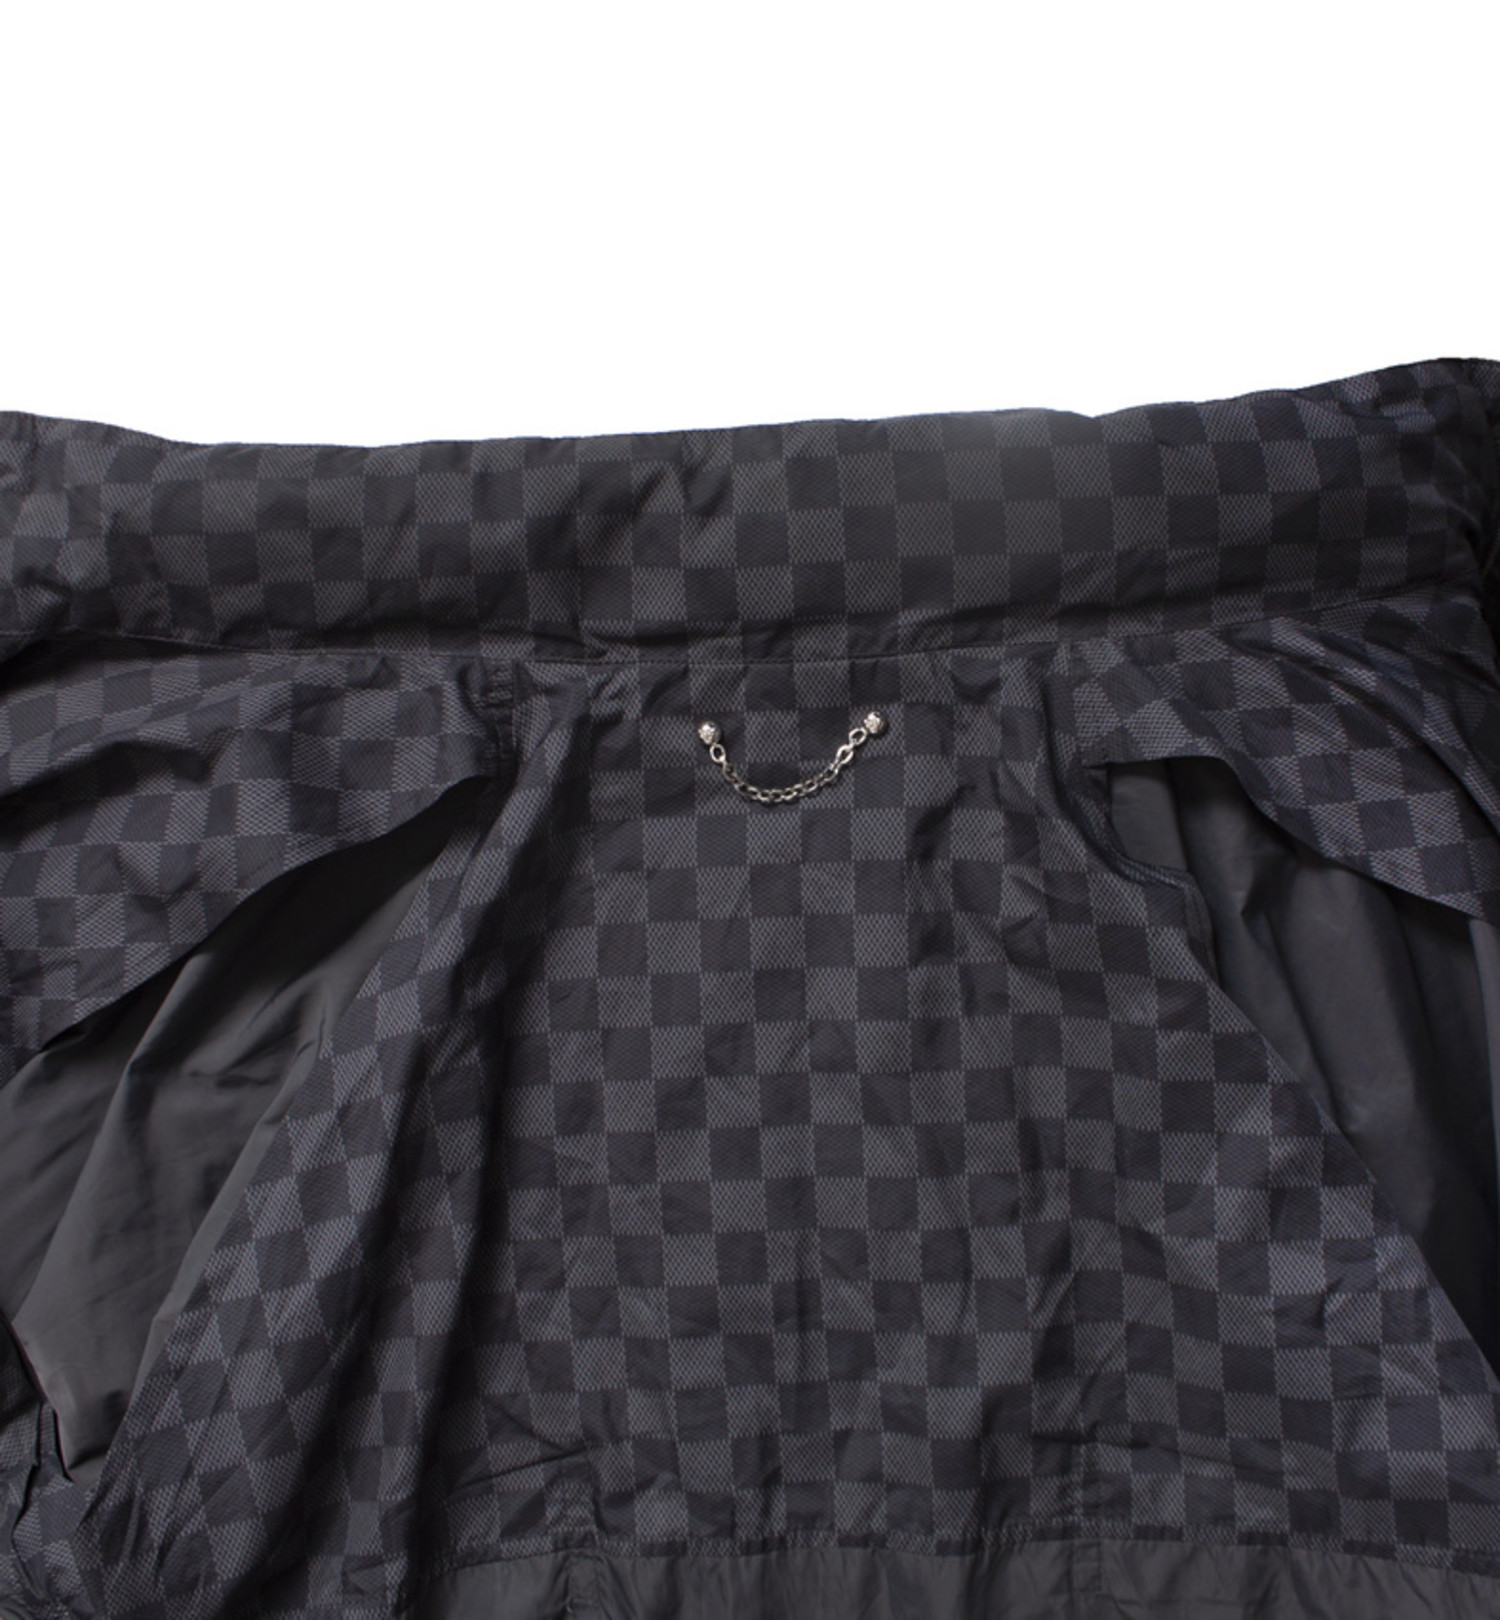 Damier Graphite Denim Jacket - Women - Ready-to-Wear